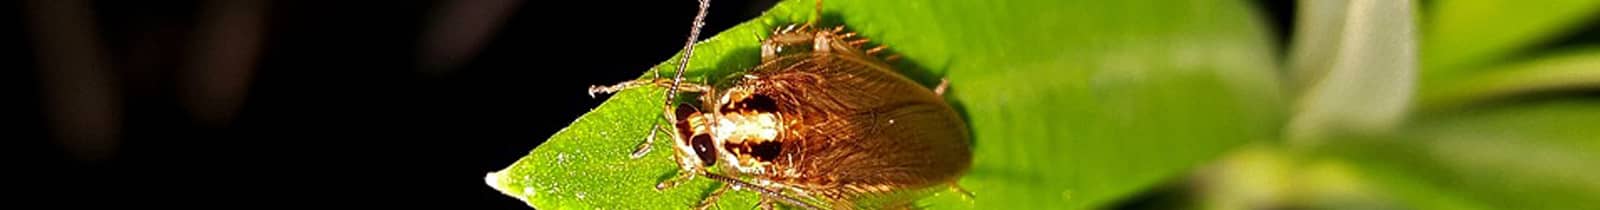 Cockroach exterminator pest control Boise, Idaho